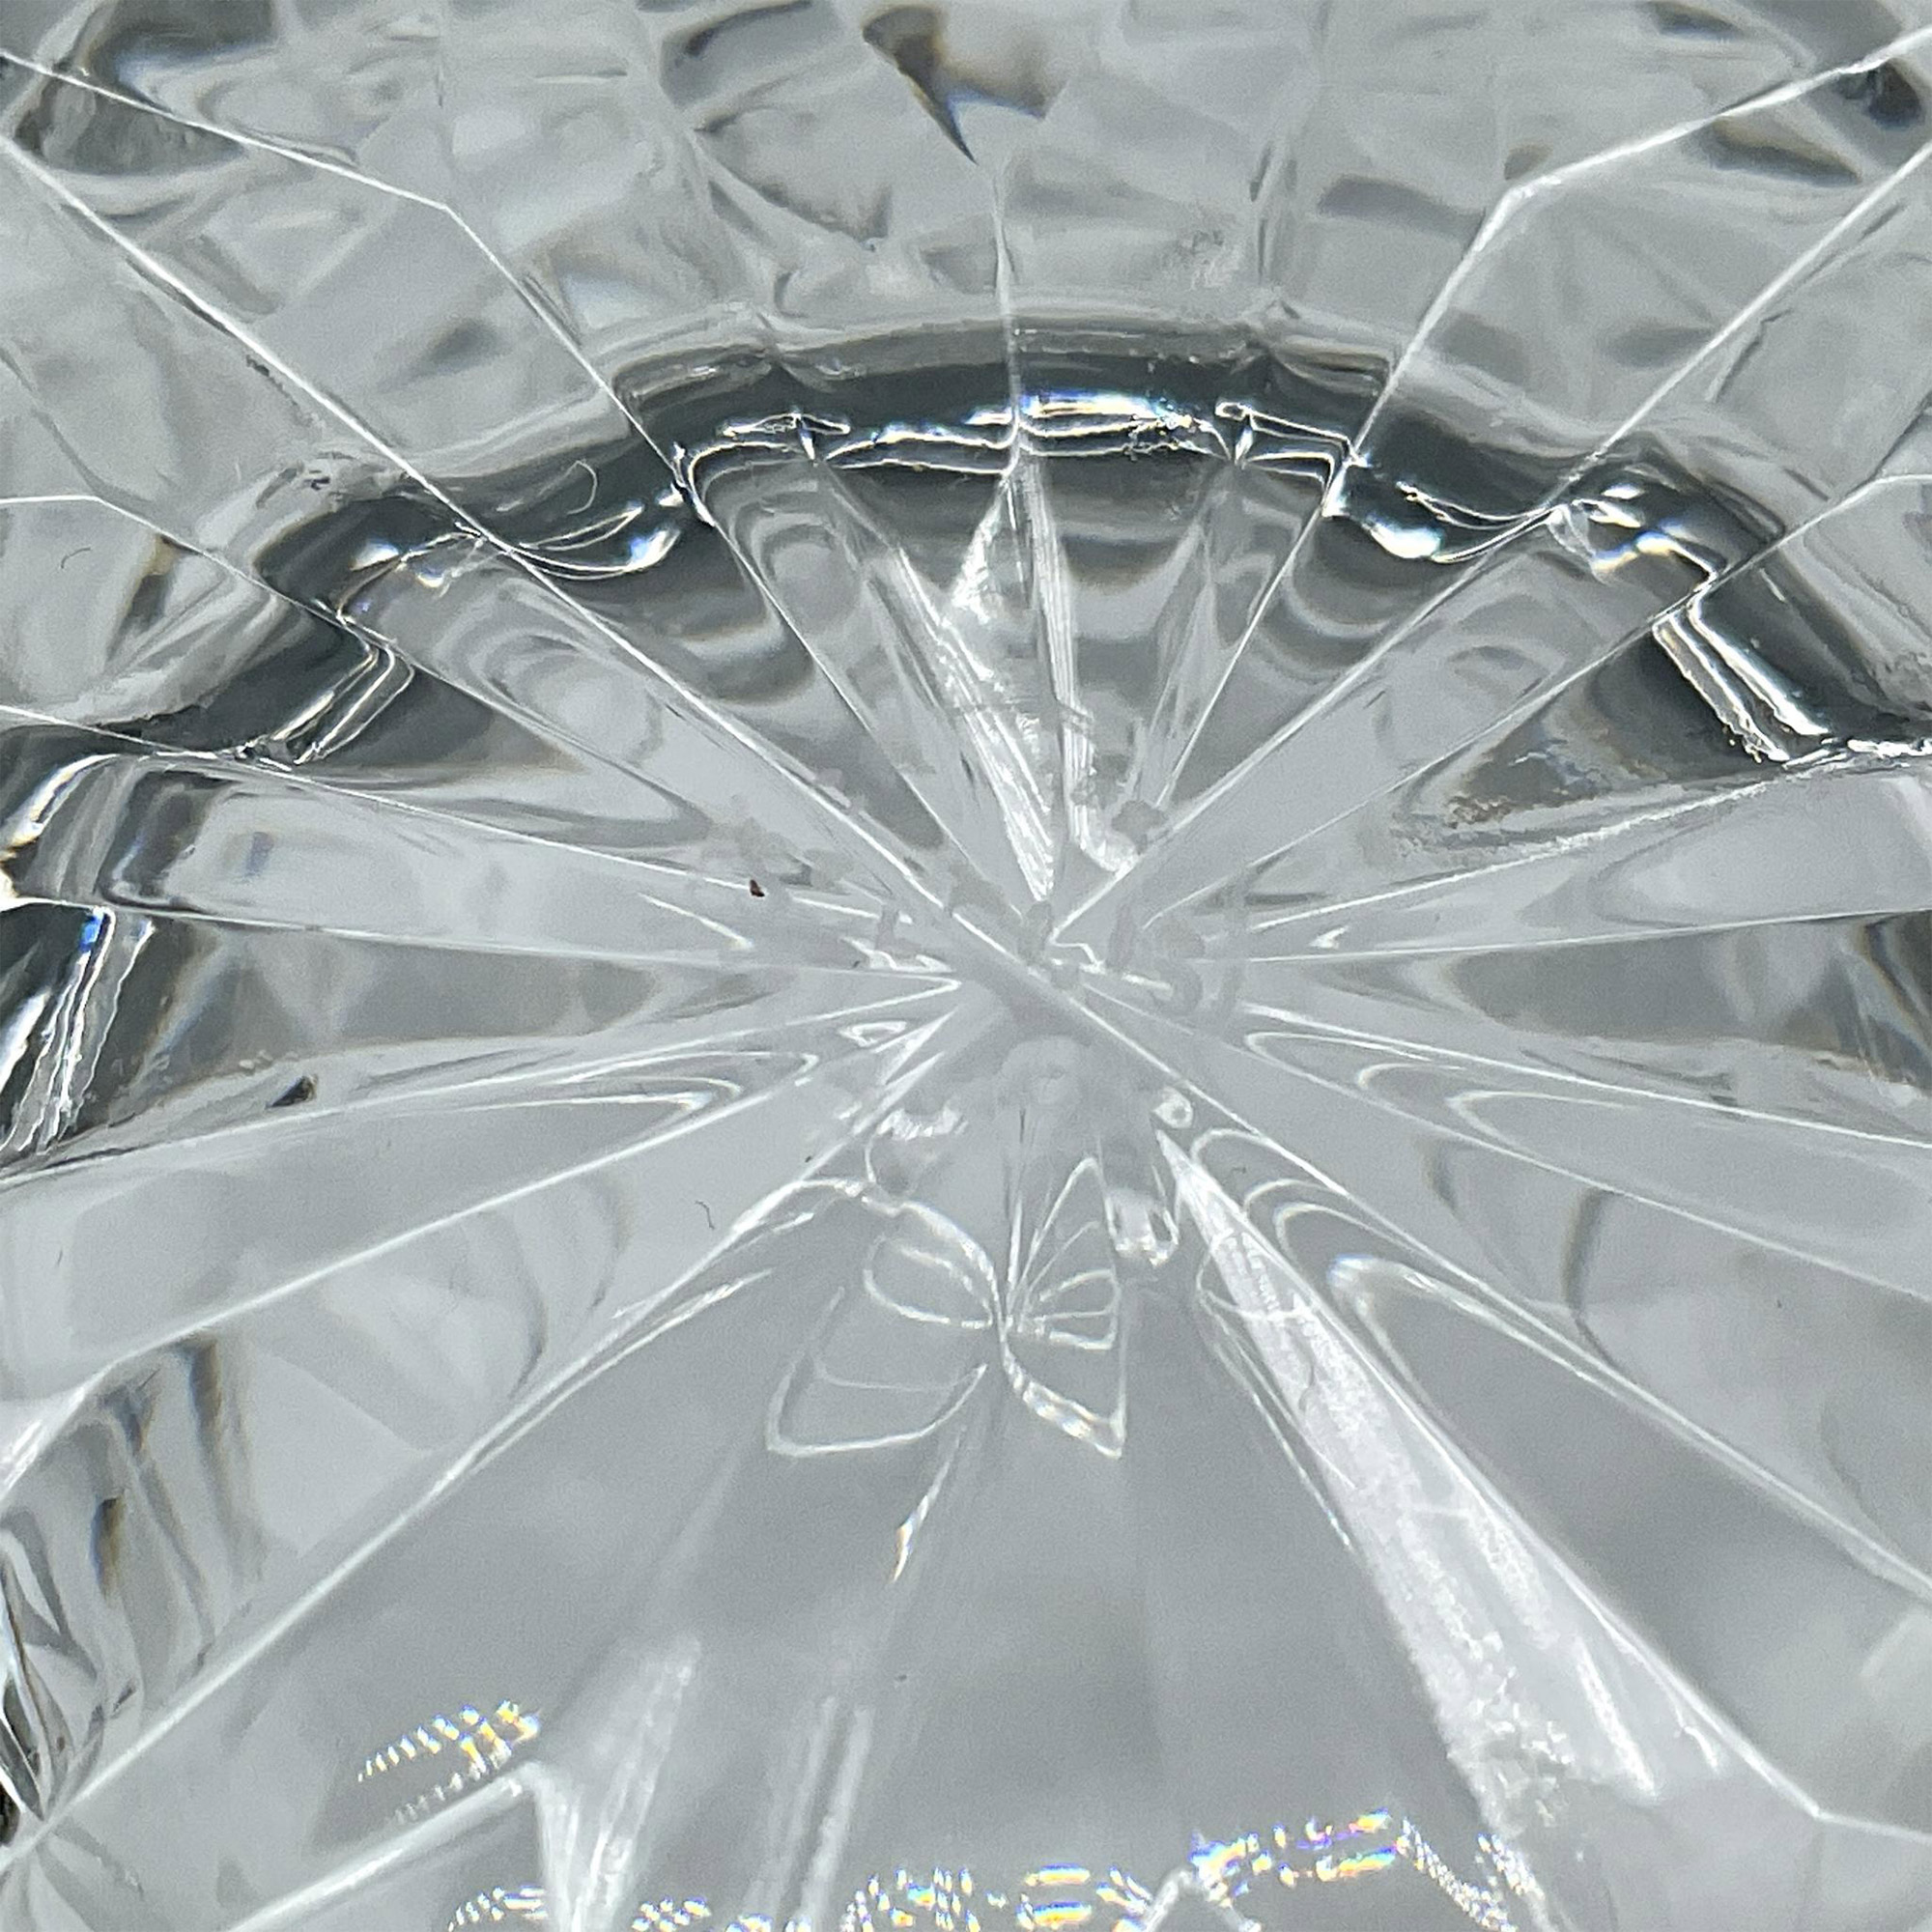 4pc Baccarat Crystal Rocks Glasses - Image 5 of 5